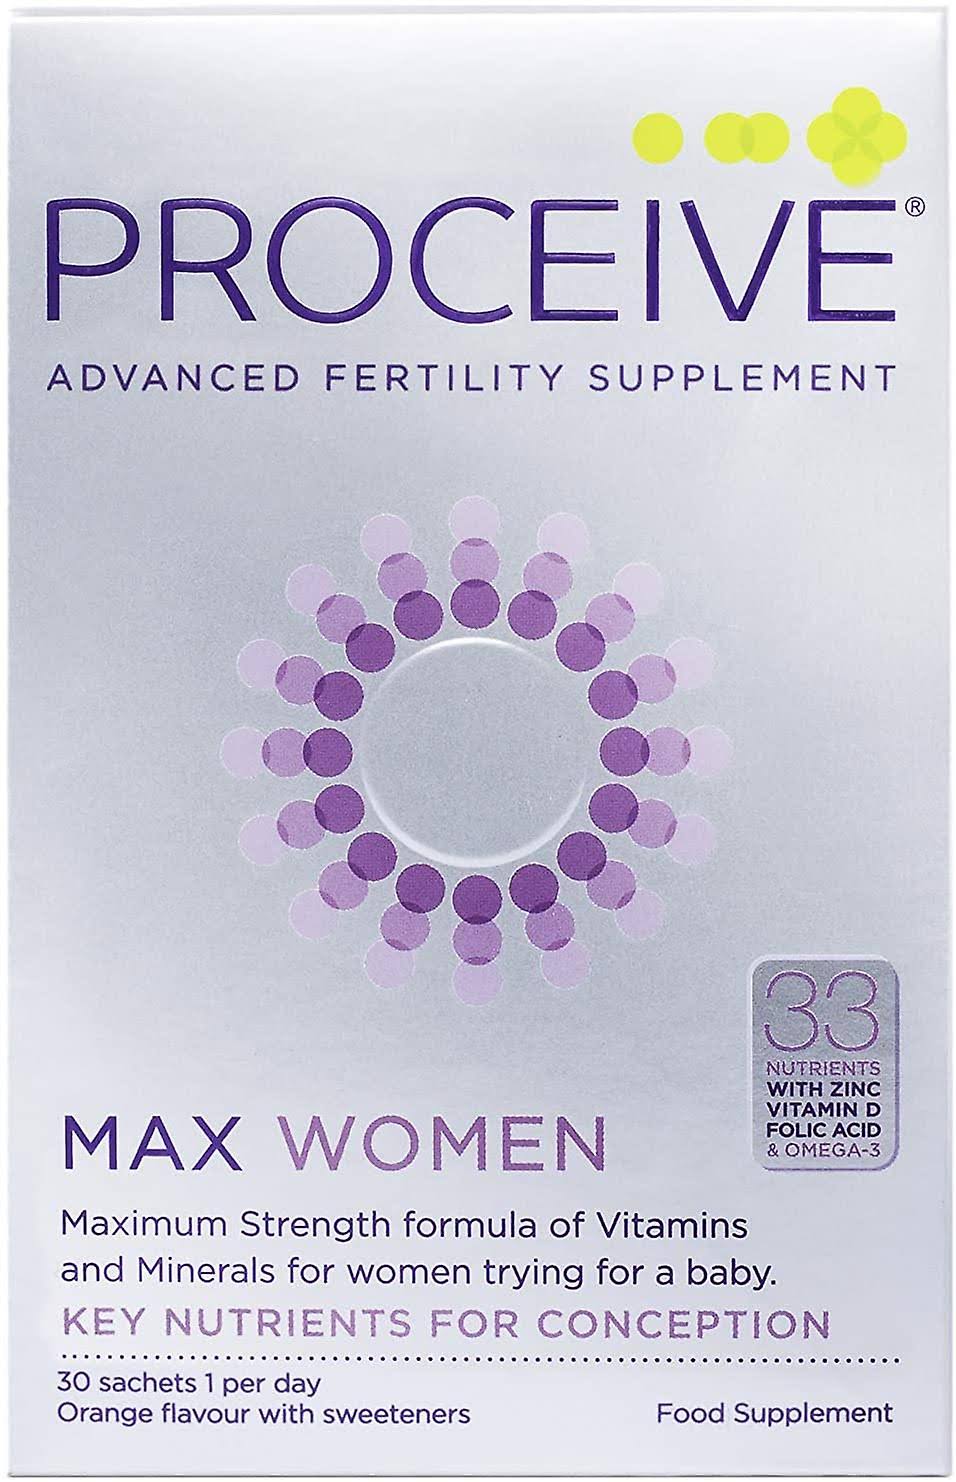 PROCEIVE Advanced Fertility Supplement Max Women - 30 Sachets